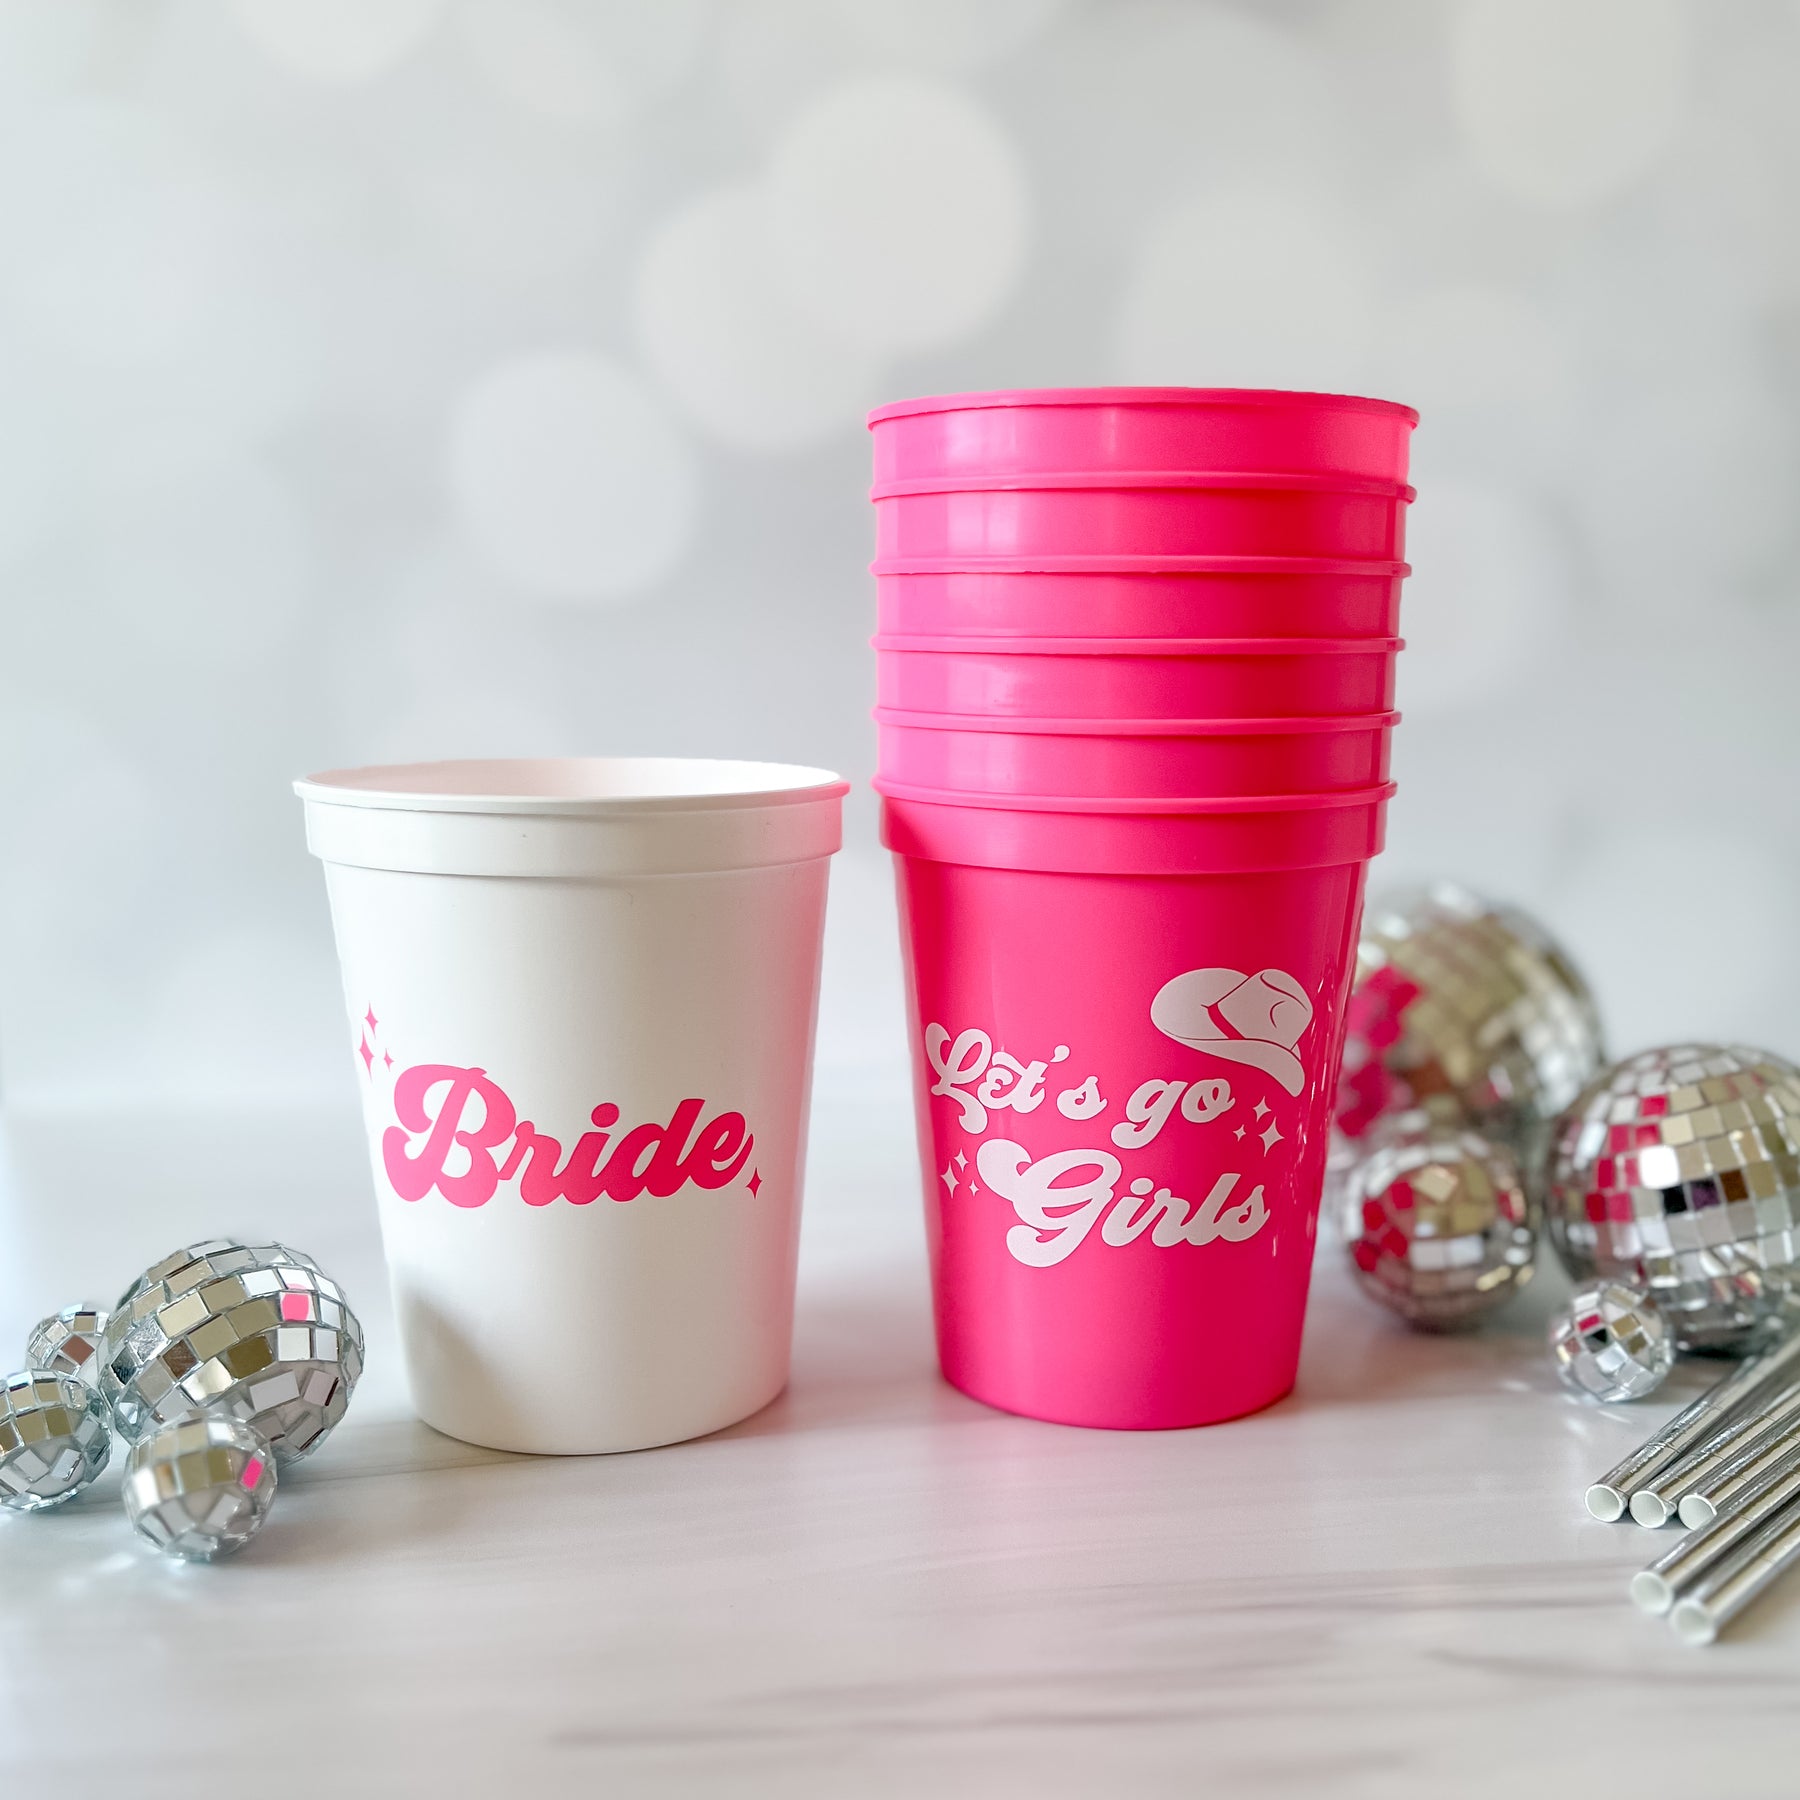 Bachelorette Weekend Foam Cups – Rubi and Lib Design Studio